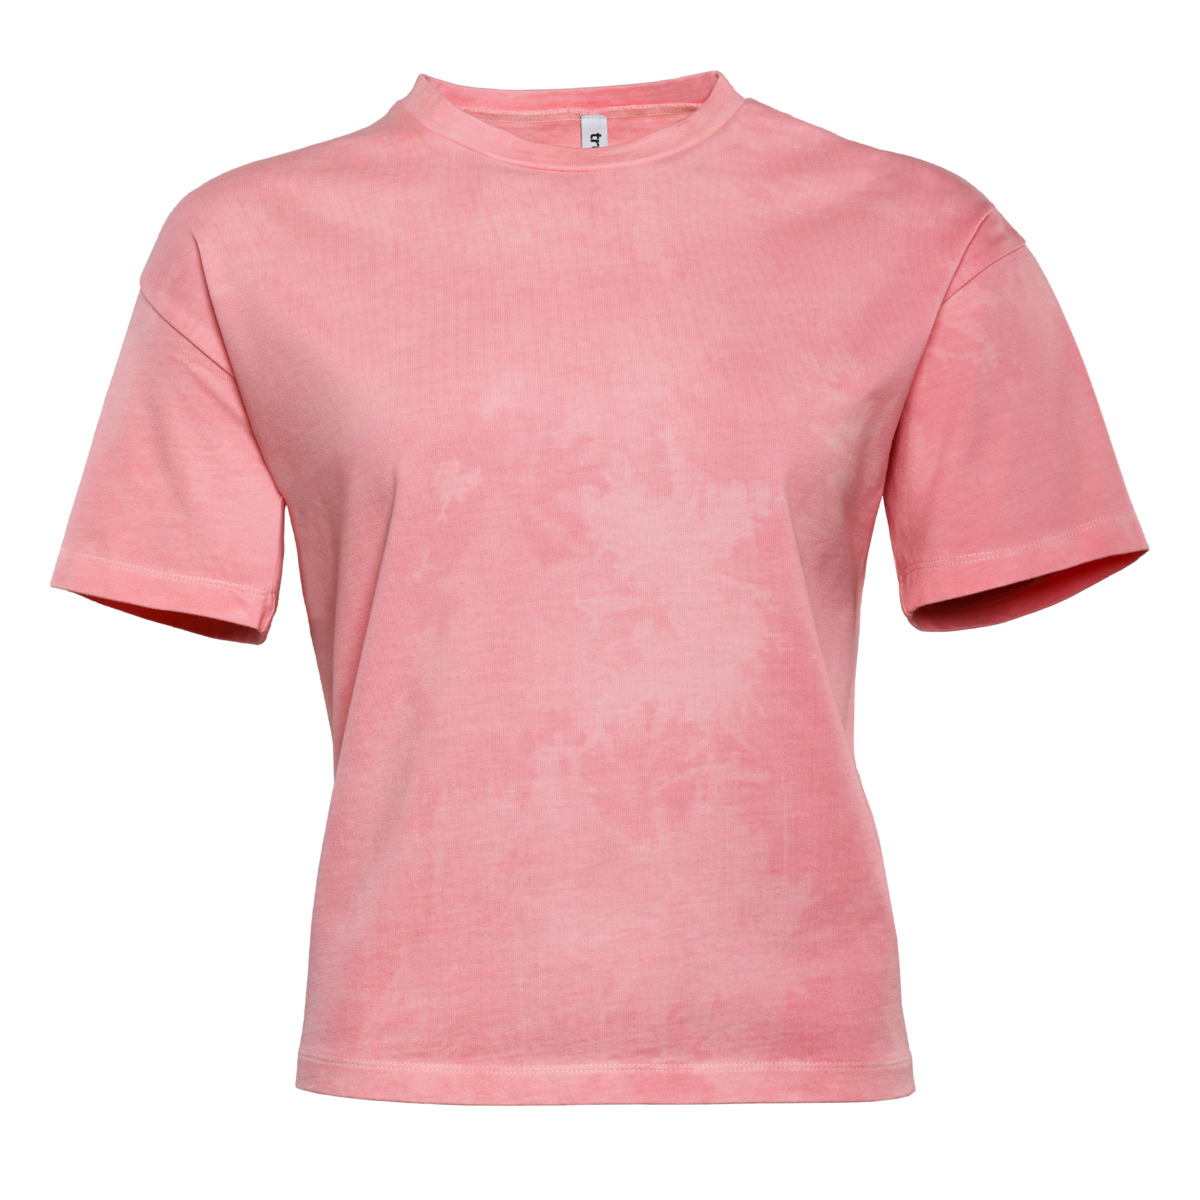 Pink Crafted boxy T-shirt, BENJA